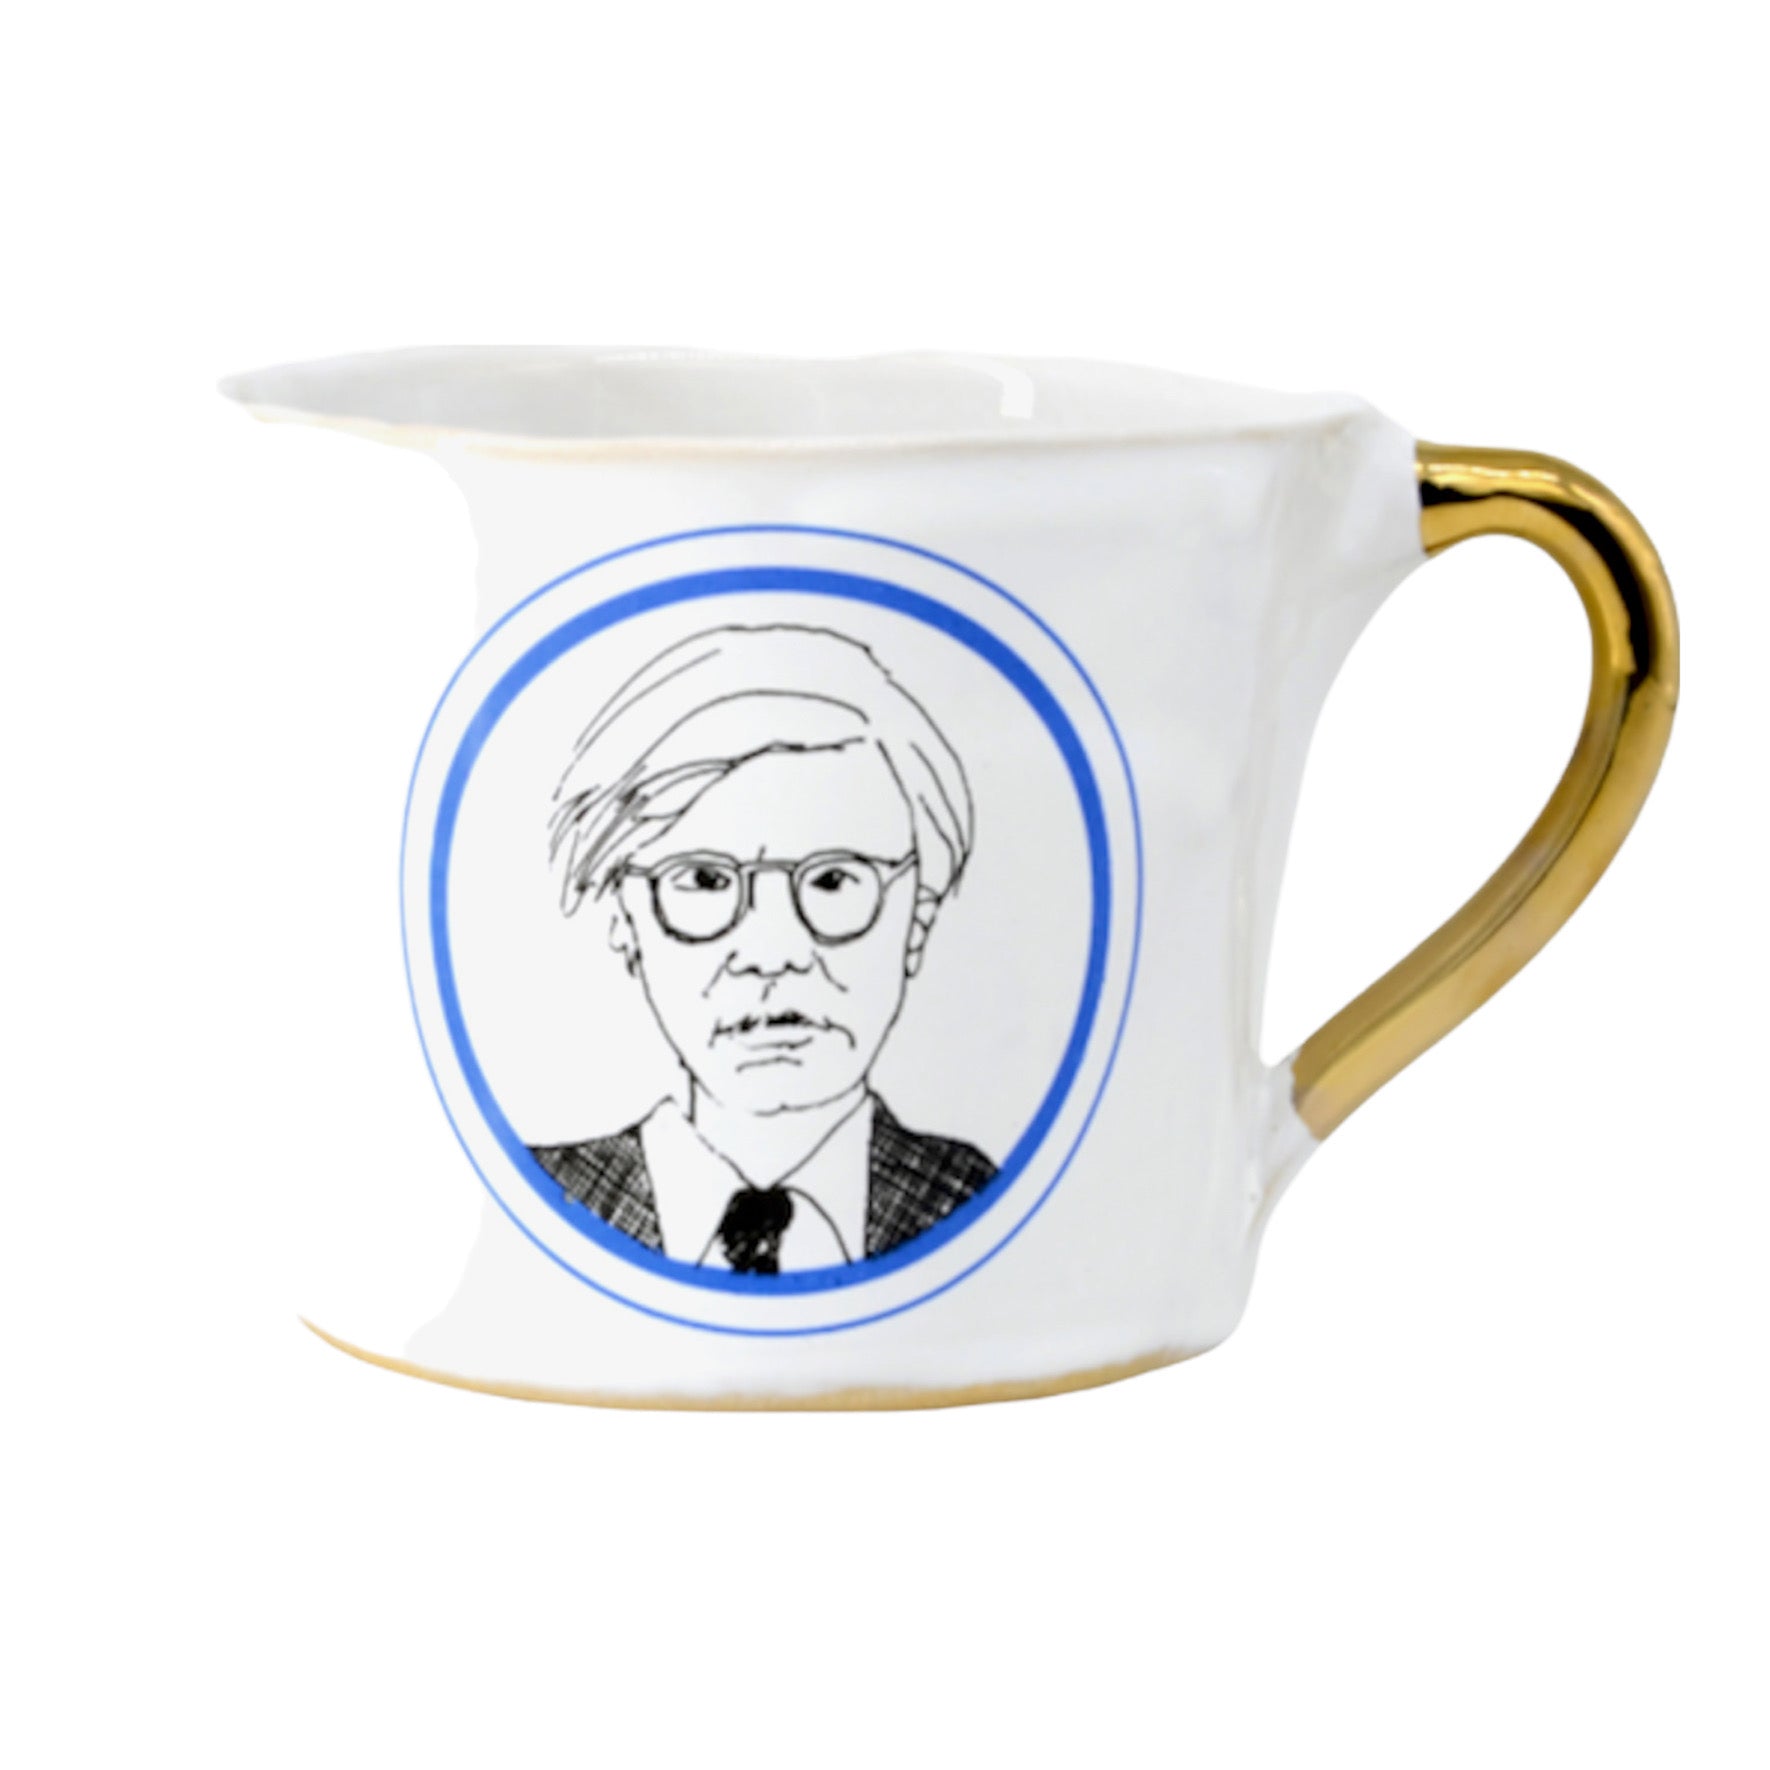 KUHN KERAMIK ALICE MEDIUM COFFEE CUP GLAM WITH GOLDEN HANDLE - Andy Warhol